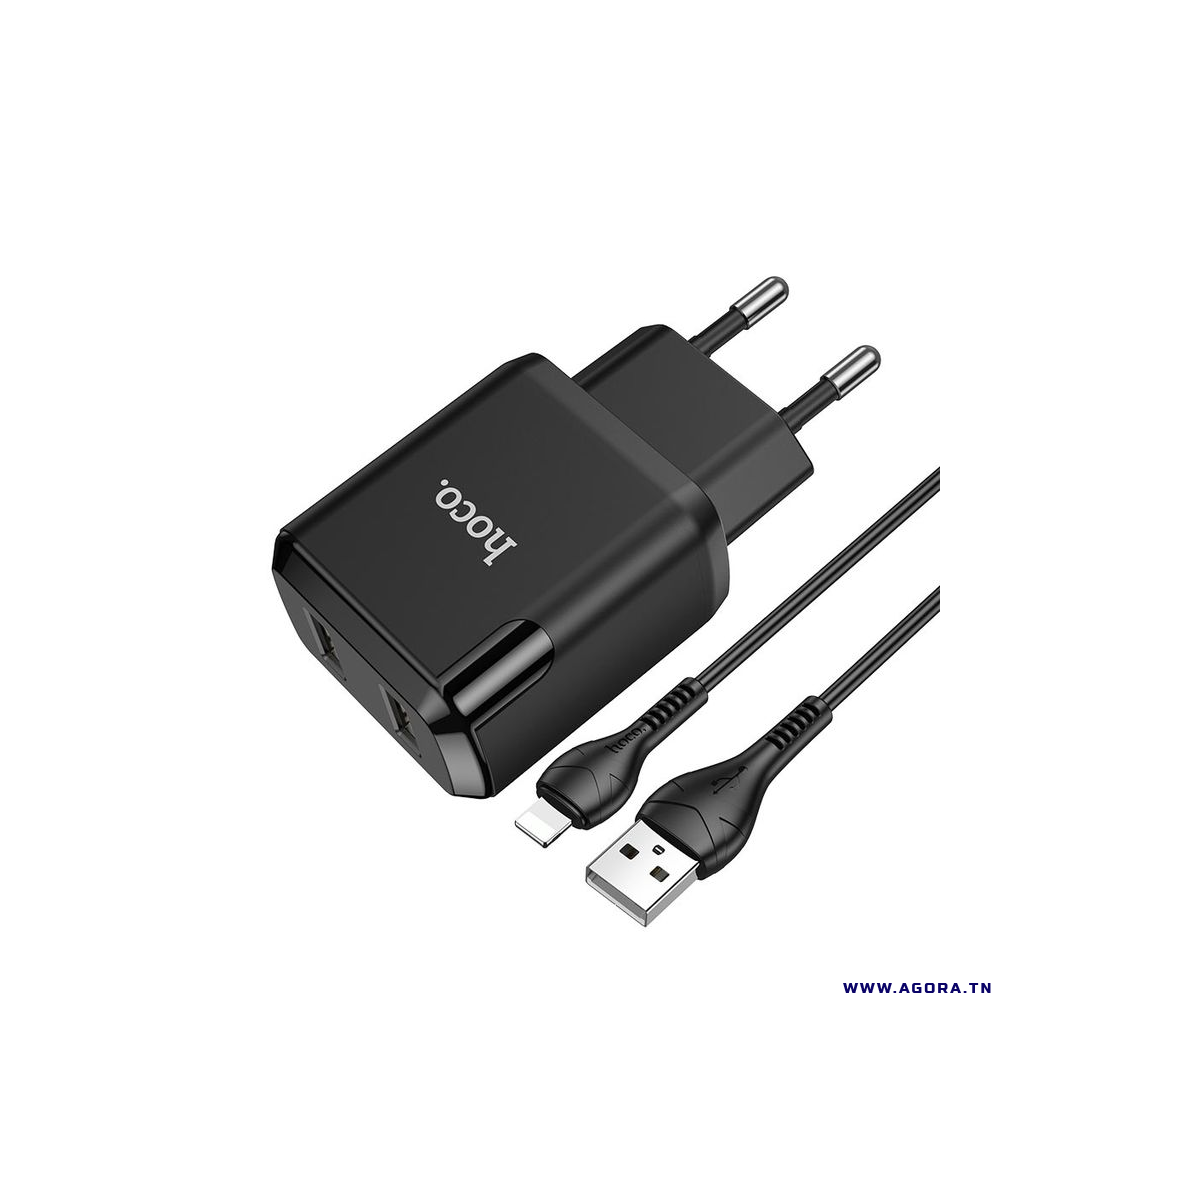 CHARGEUR HOCO N7 2 PORTS USB VERS MICRO USB | NOIR | Agora.tn